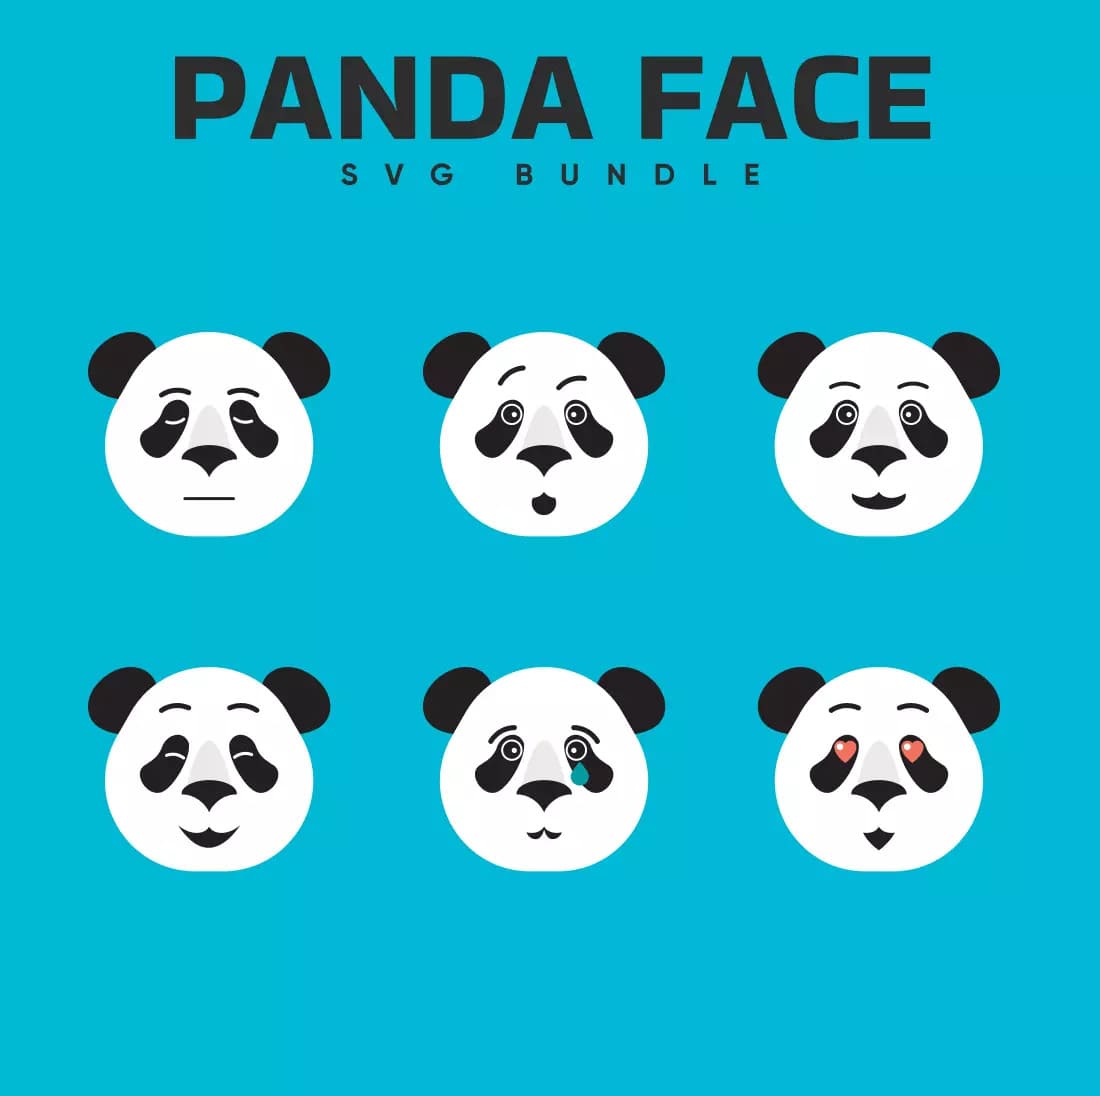 Panda face svg bundle.